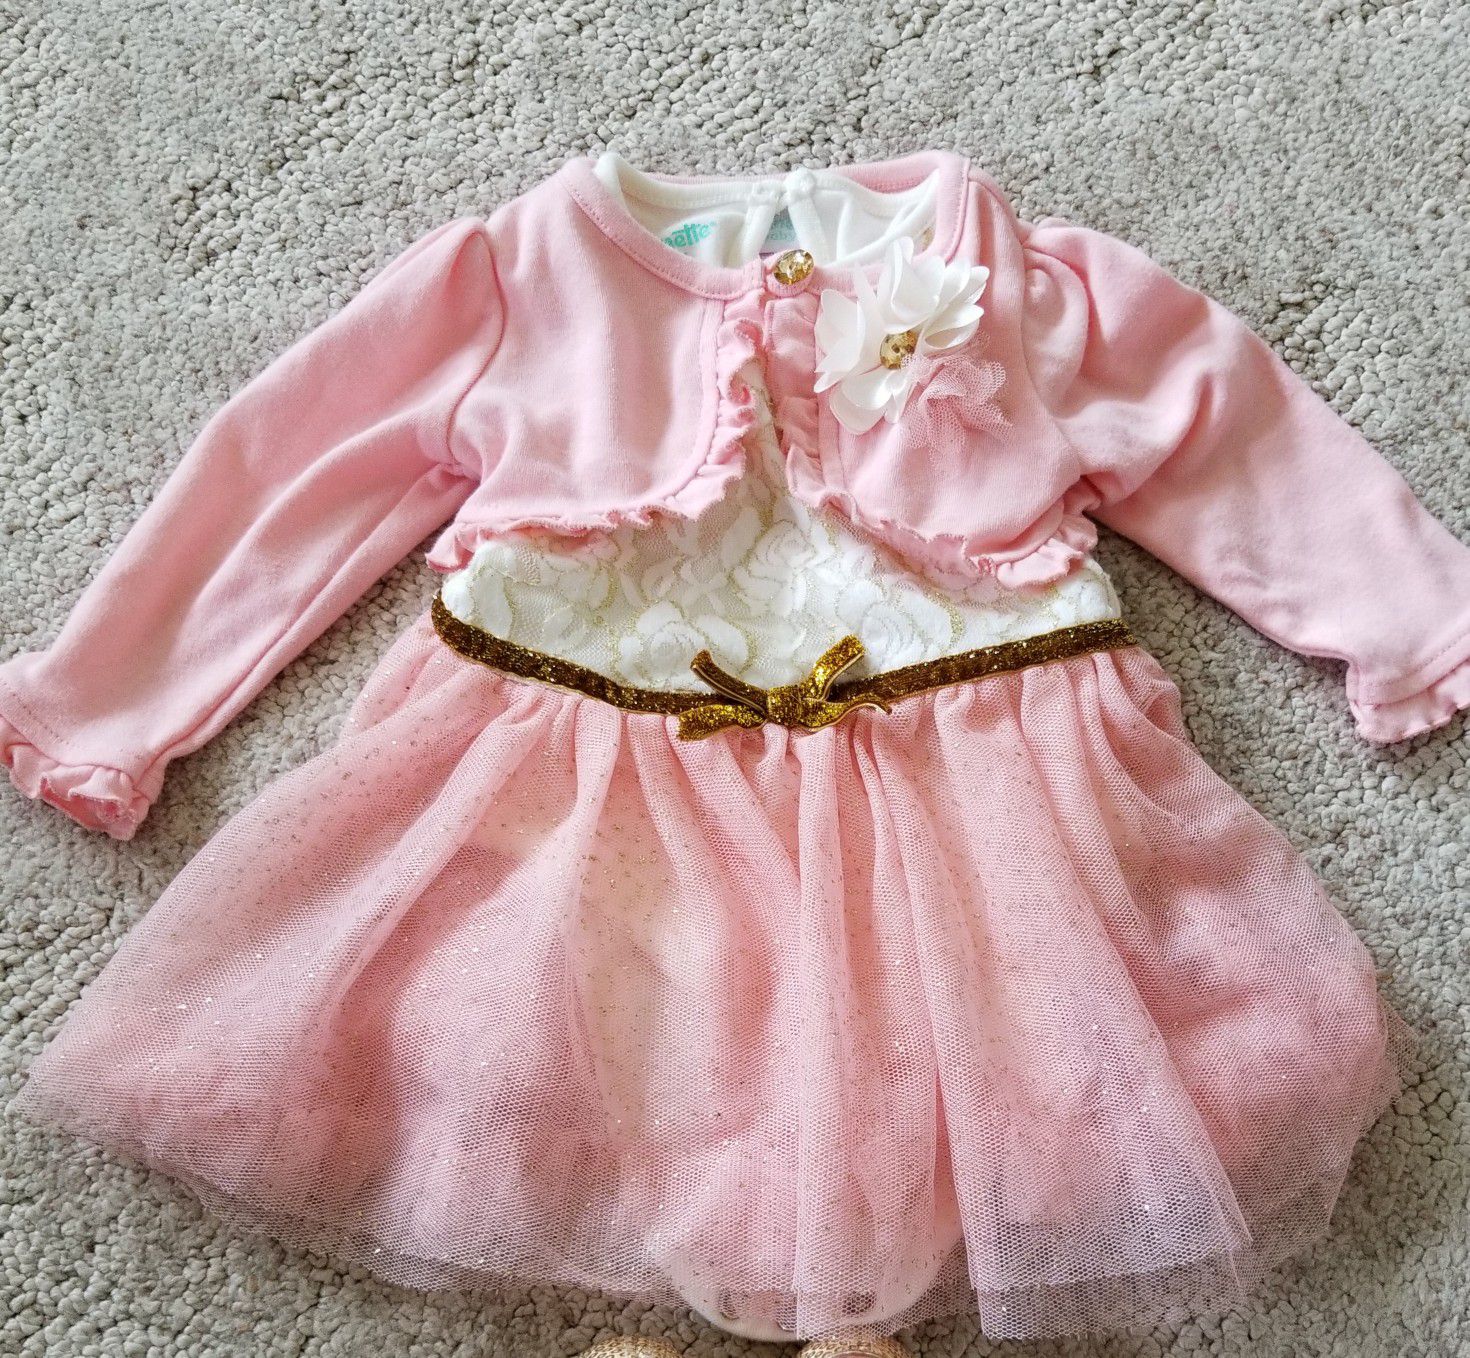 Infant dress